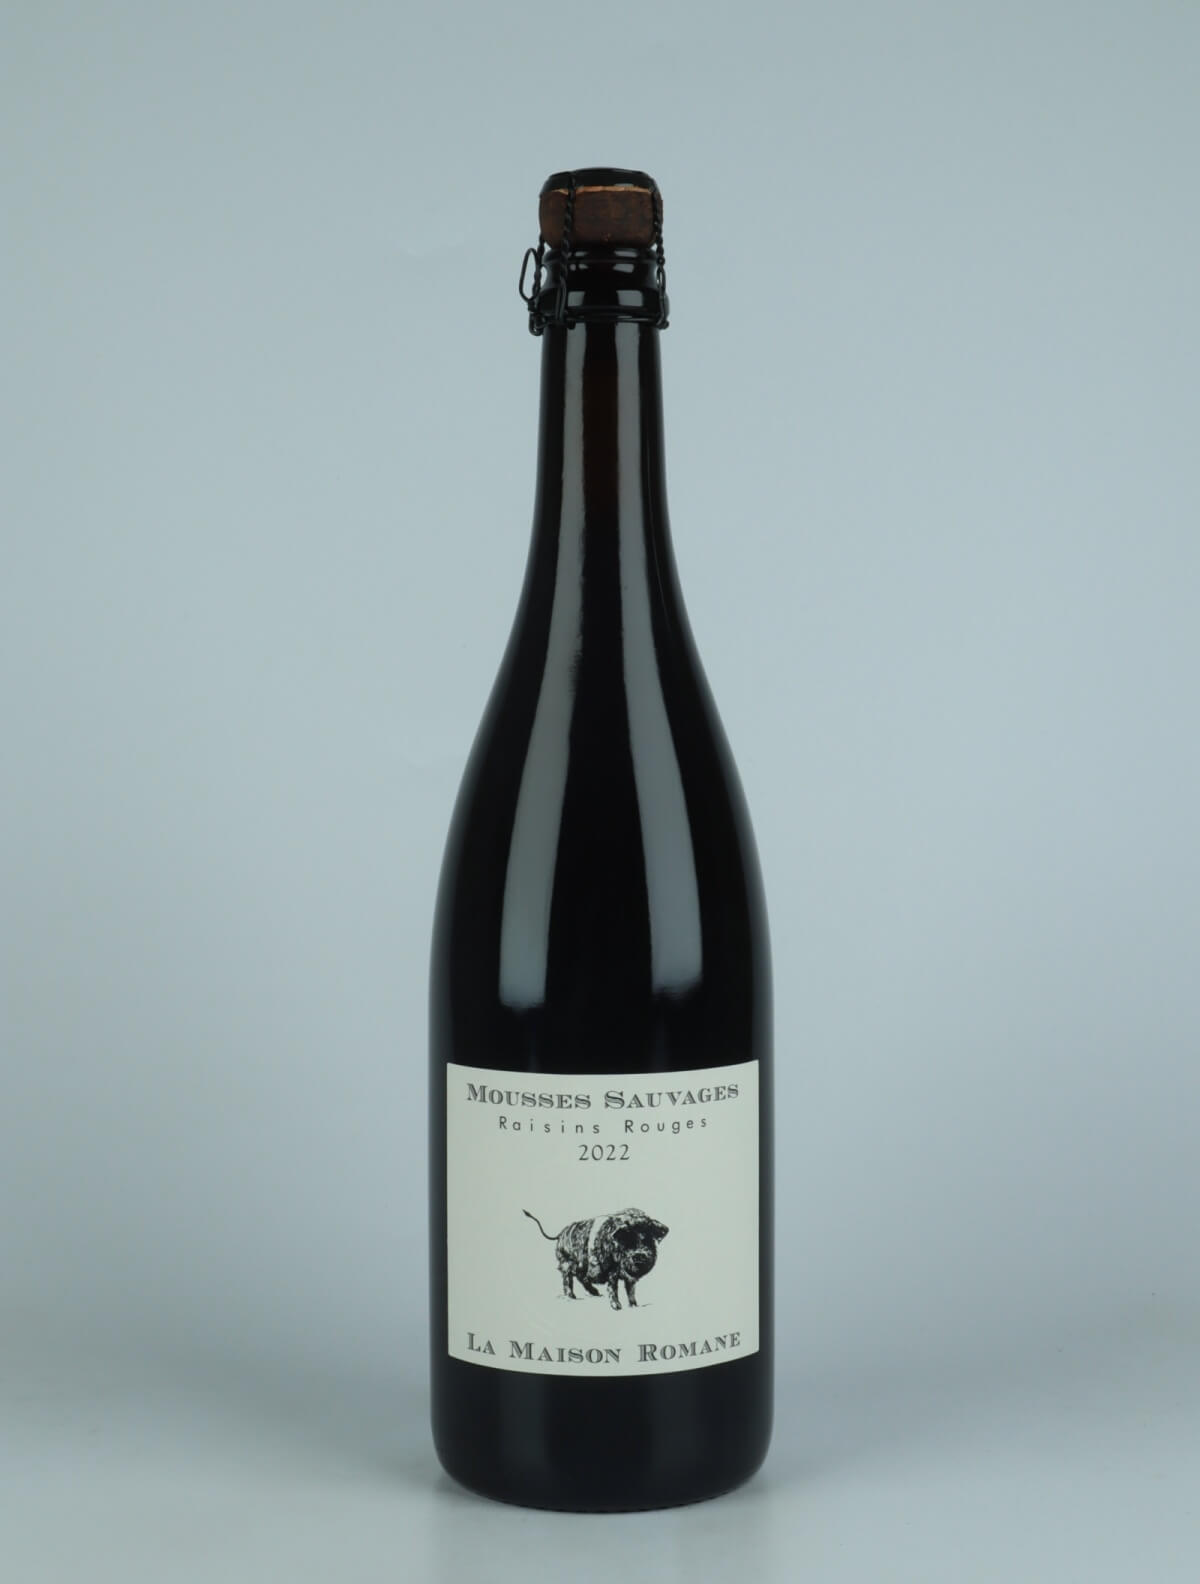 En flaske 2022 Mousses Sauvages Raisins Rouges Øl fra La Maison Romane, Bourgogne i Frankrig